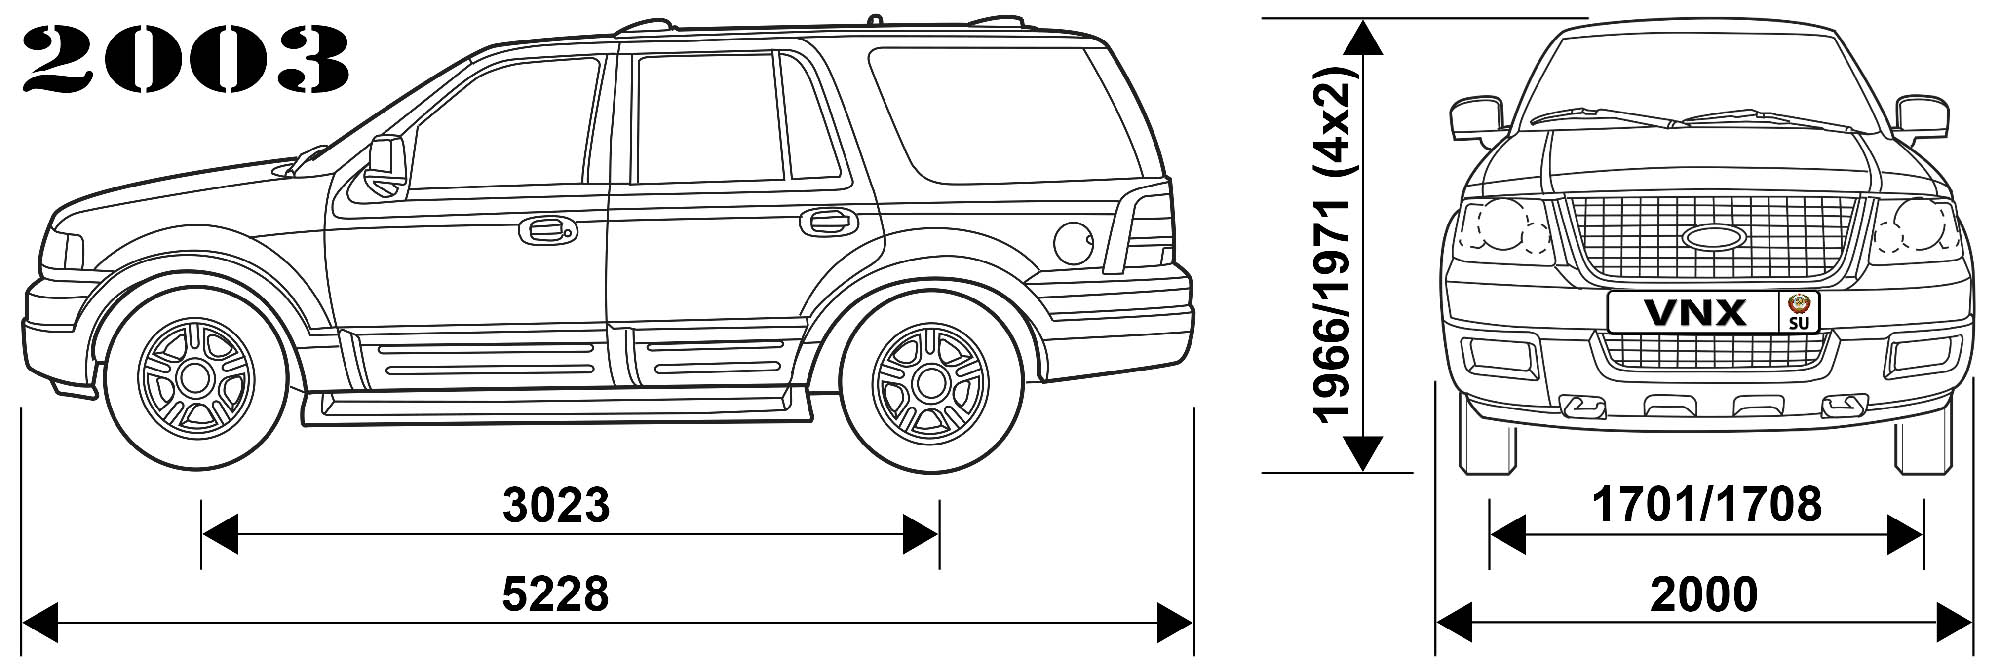 Габаритные размеры Форд Экспедишн 2003-2006 (dimensions Ford Expedition U222)